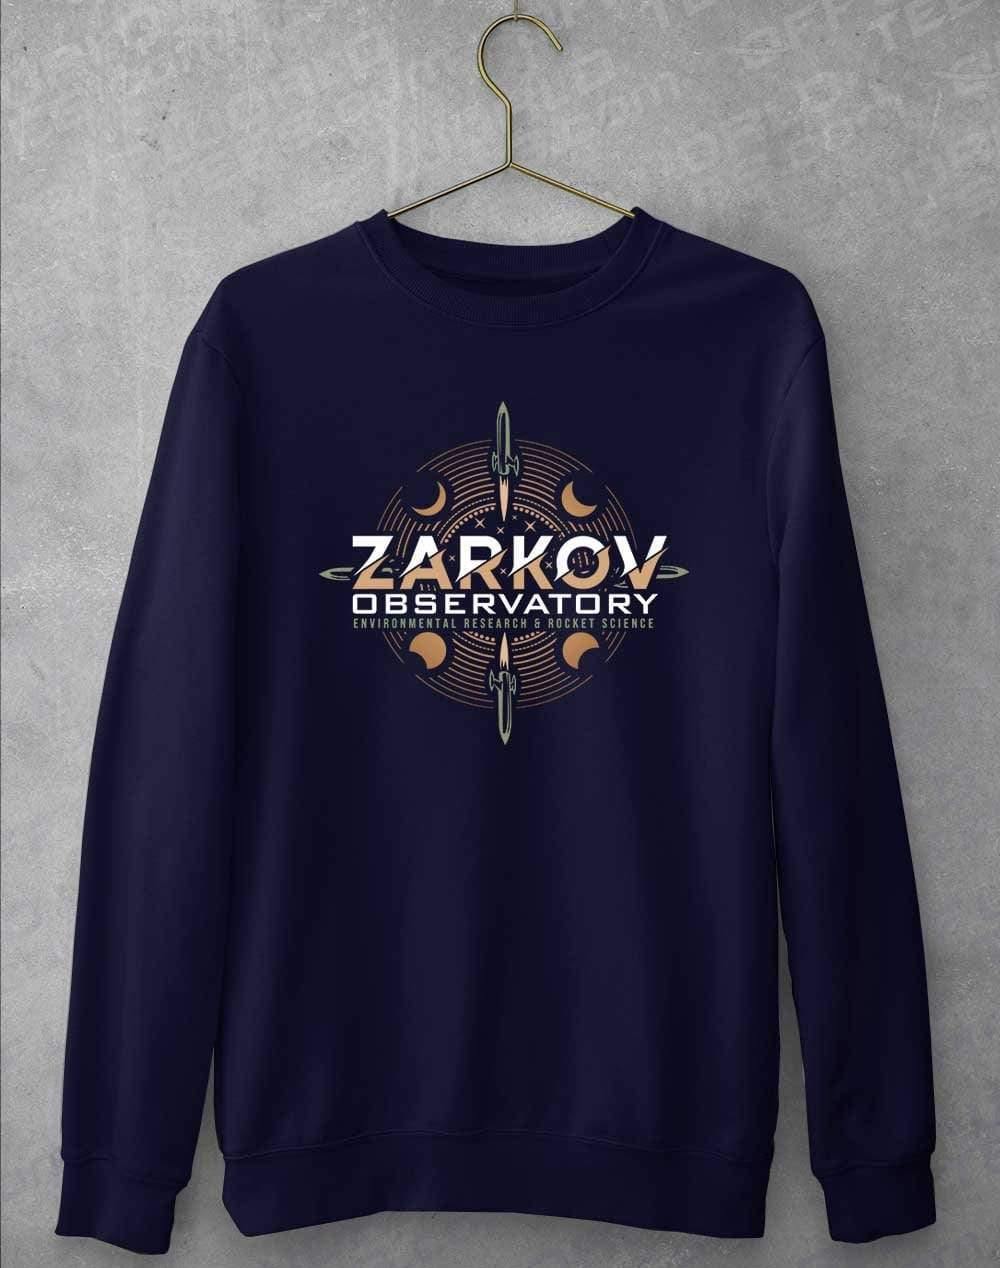 Zarkov Observatory Sweatshirt S / Oxford Navy  - Off World Tees